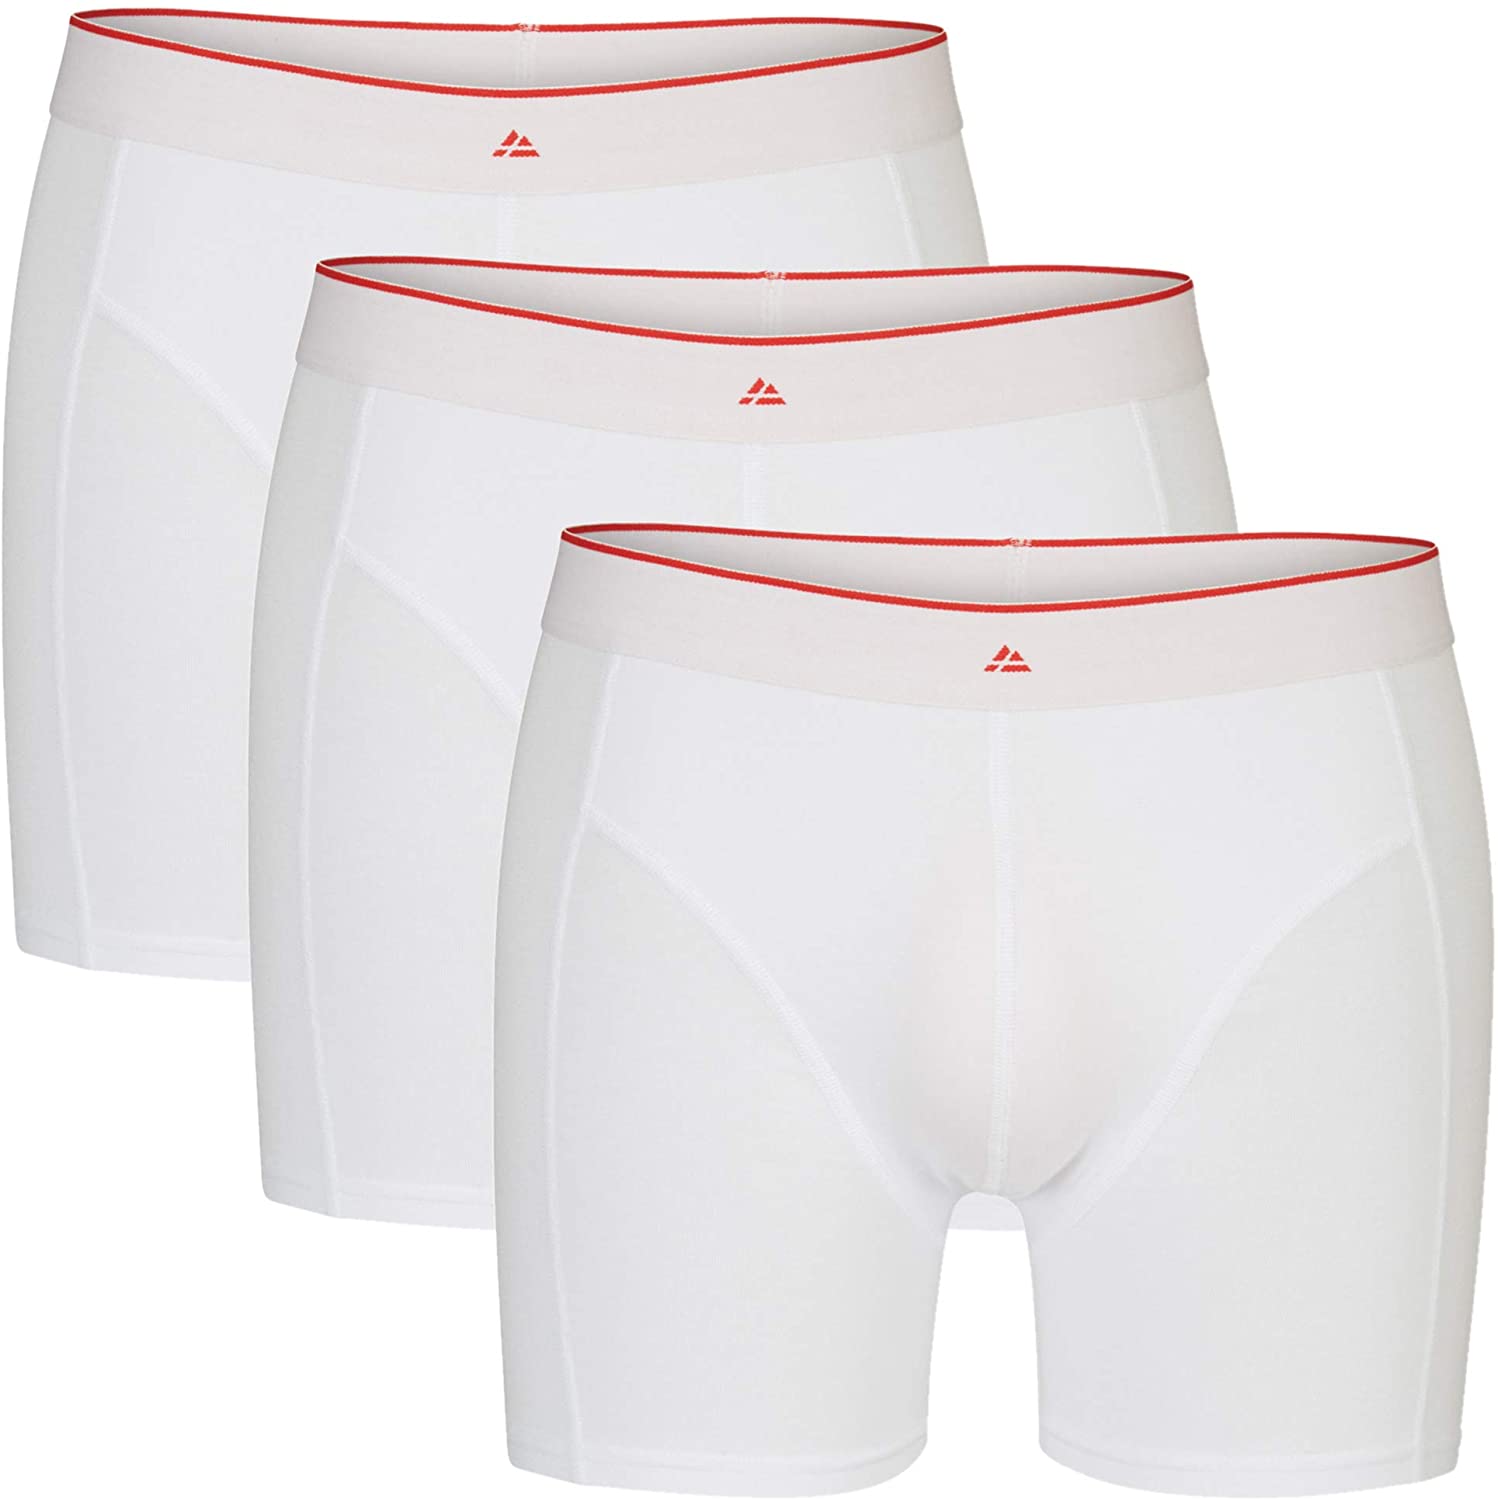 tromme Beregning forlade DANISH ENDURANCE Bamboo Trunks Underwear for Men 3 Pack, Breathable, Soft,  Cool | eBay